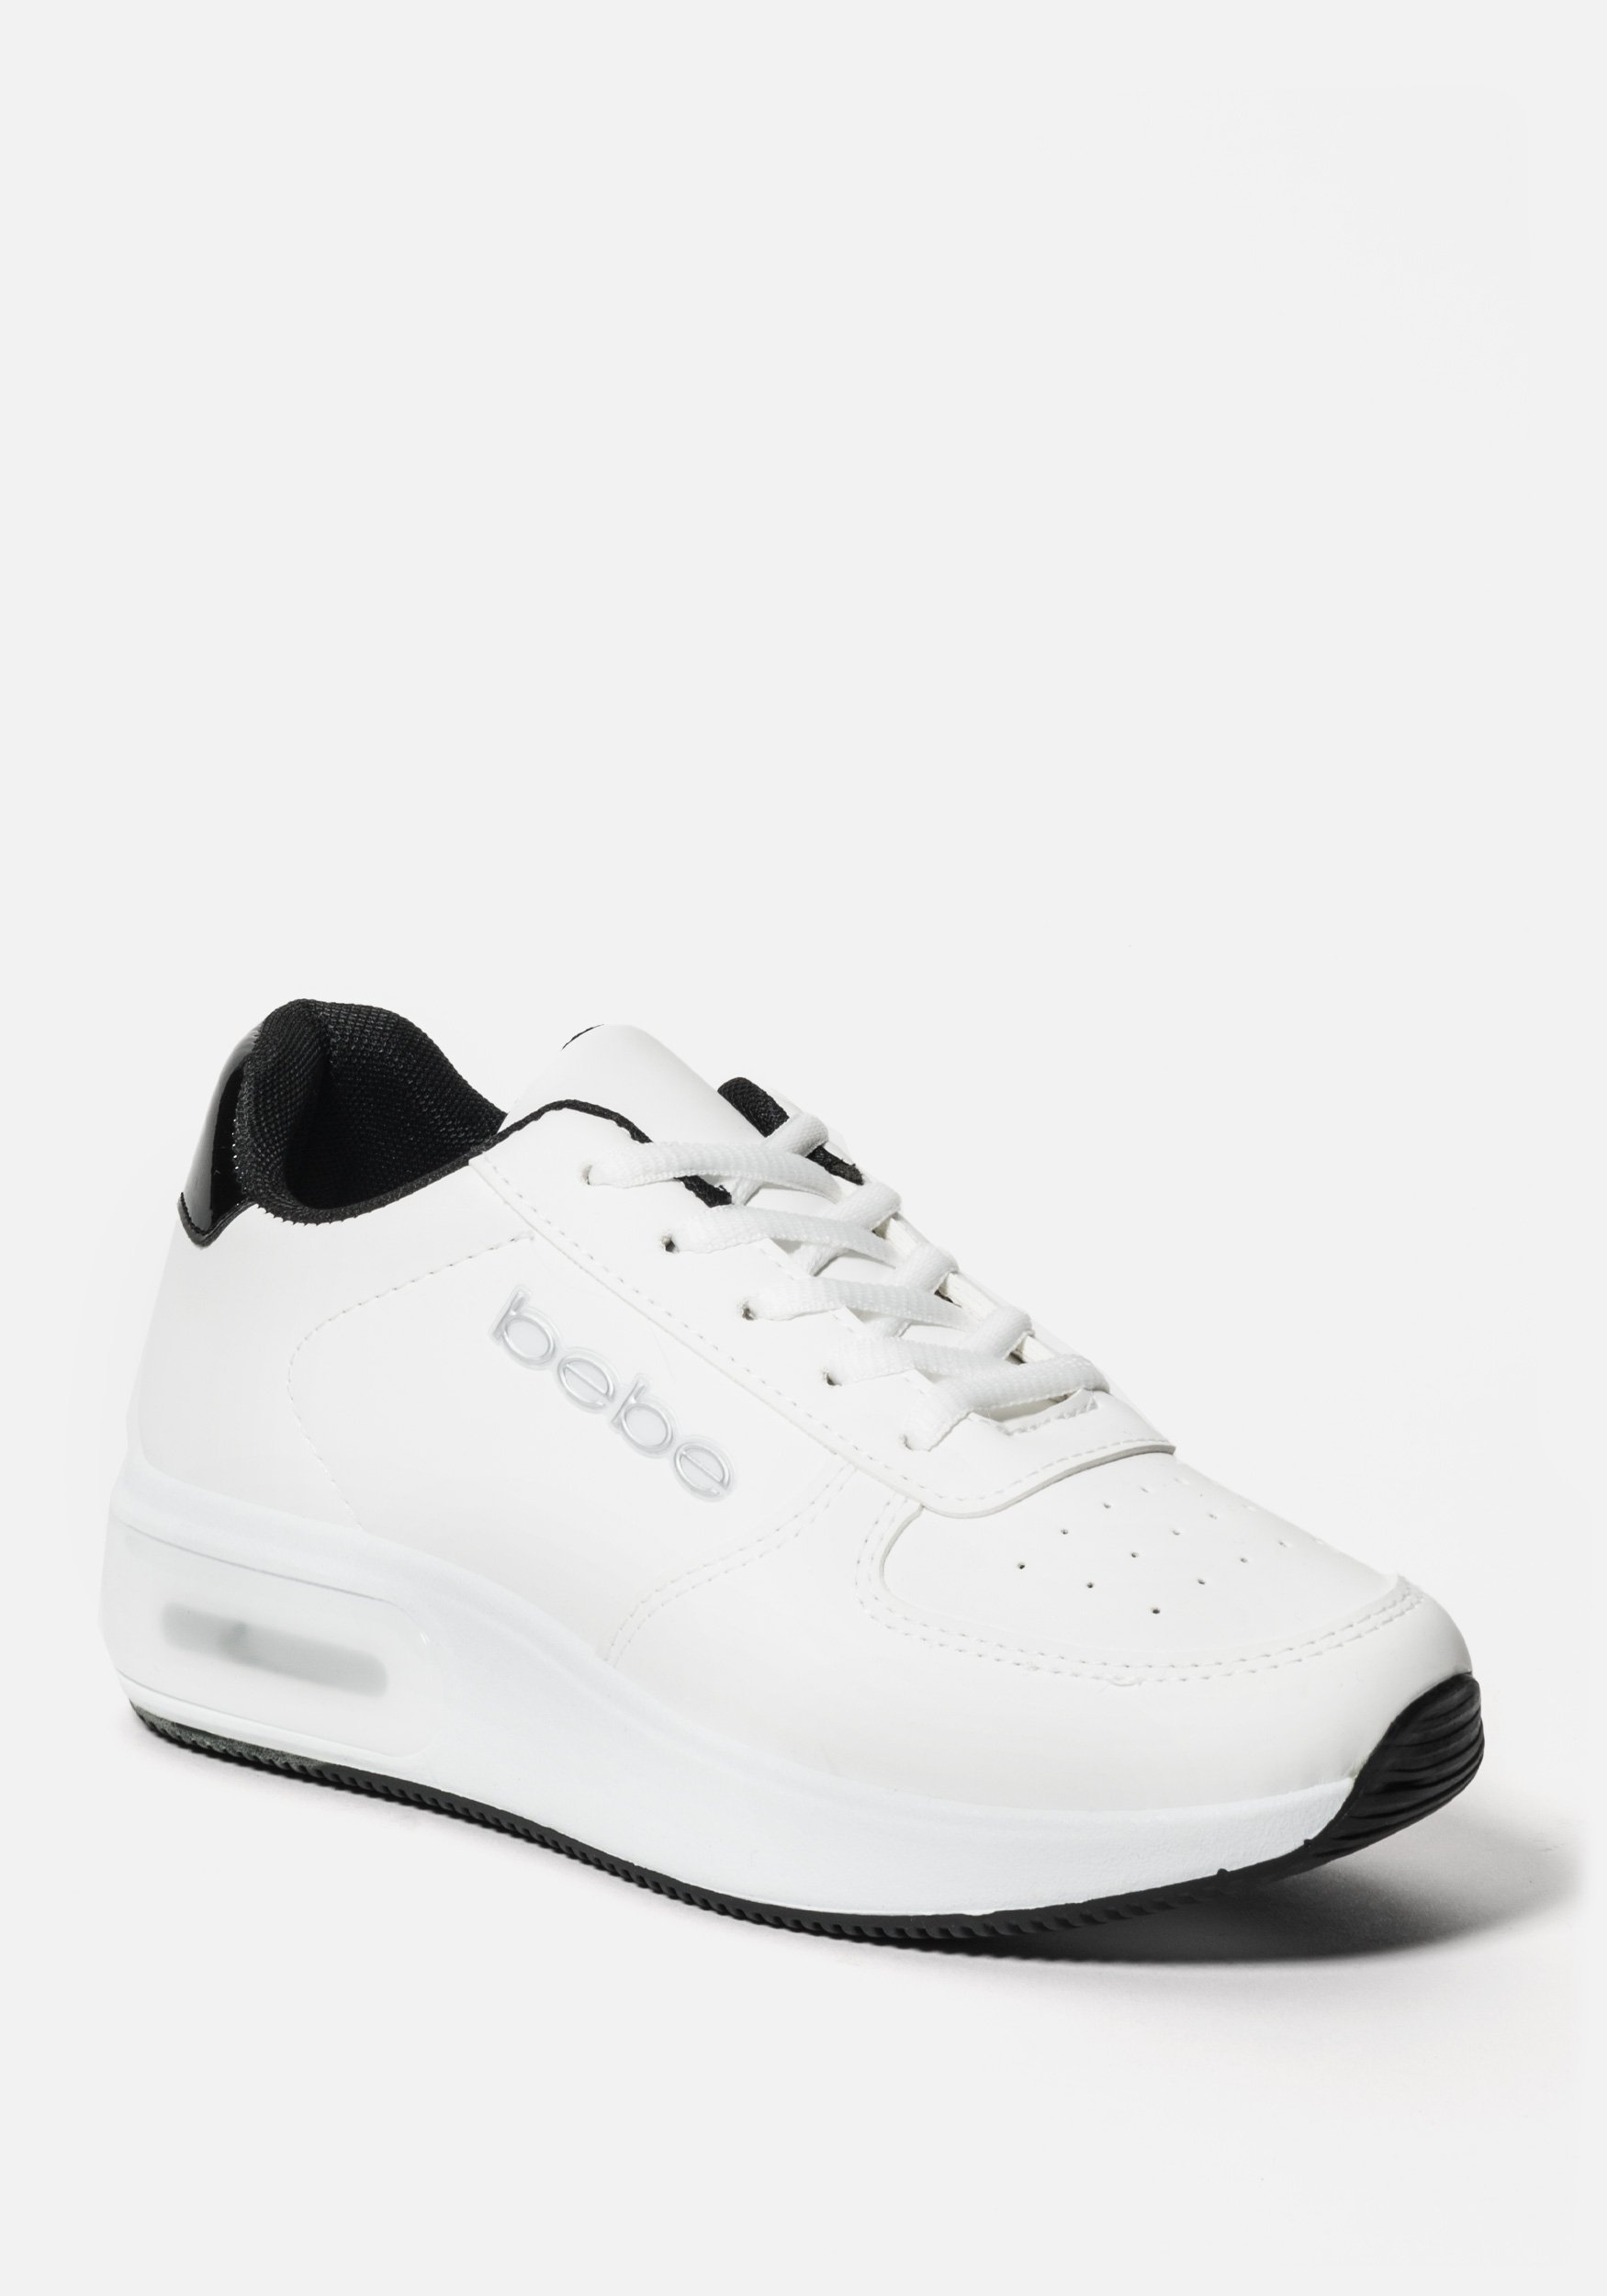 Bebe Women's Lennin Chunky Sneakers, Size 9.5 in WHITE BLACK Synthetic